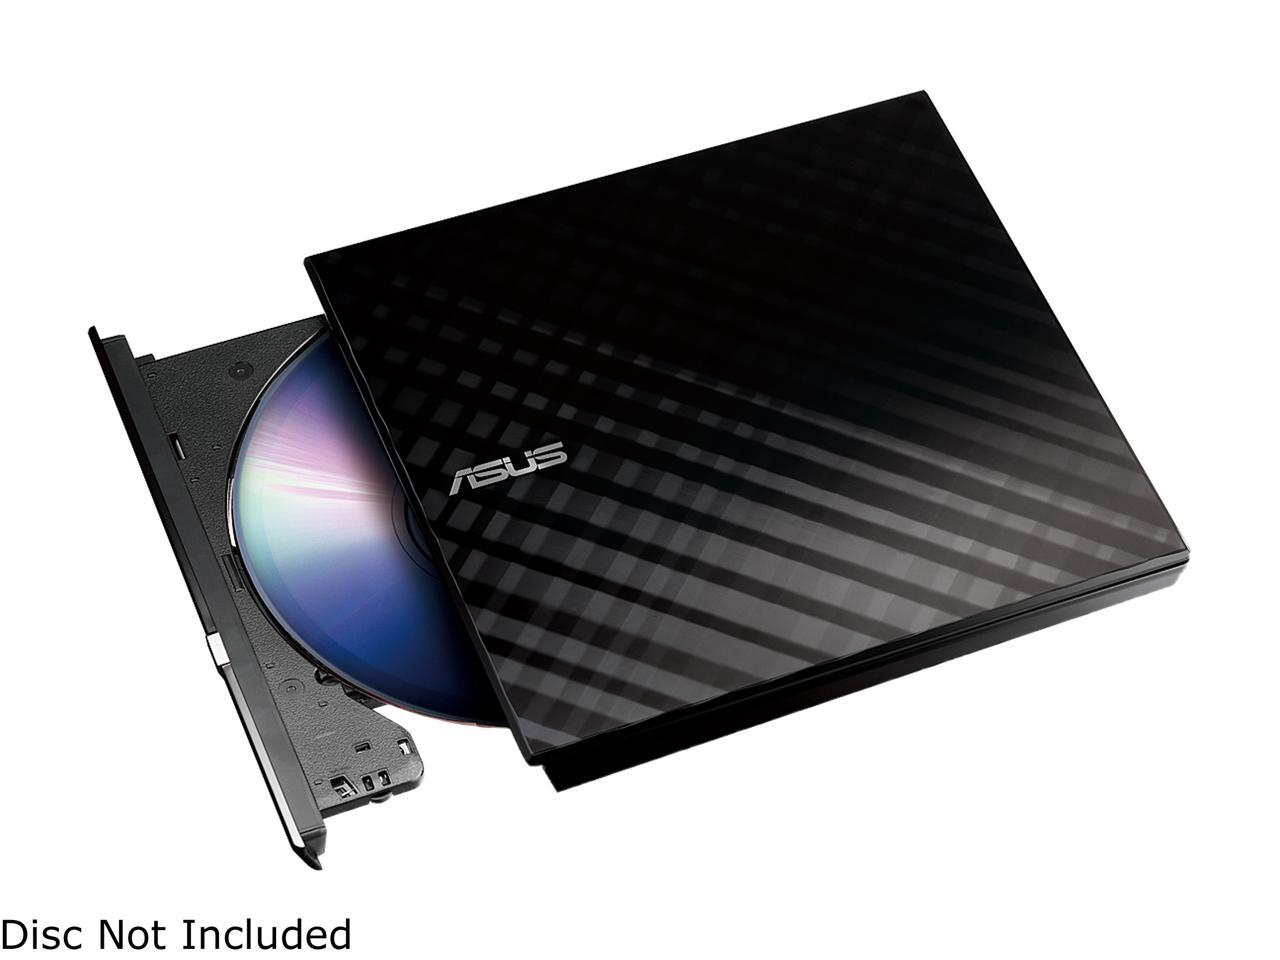 ASUS USB 2.0 Black External Slim CD / DVD Re-writer MacOS Compatible Model SDRW-08D2S-U